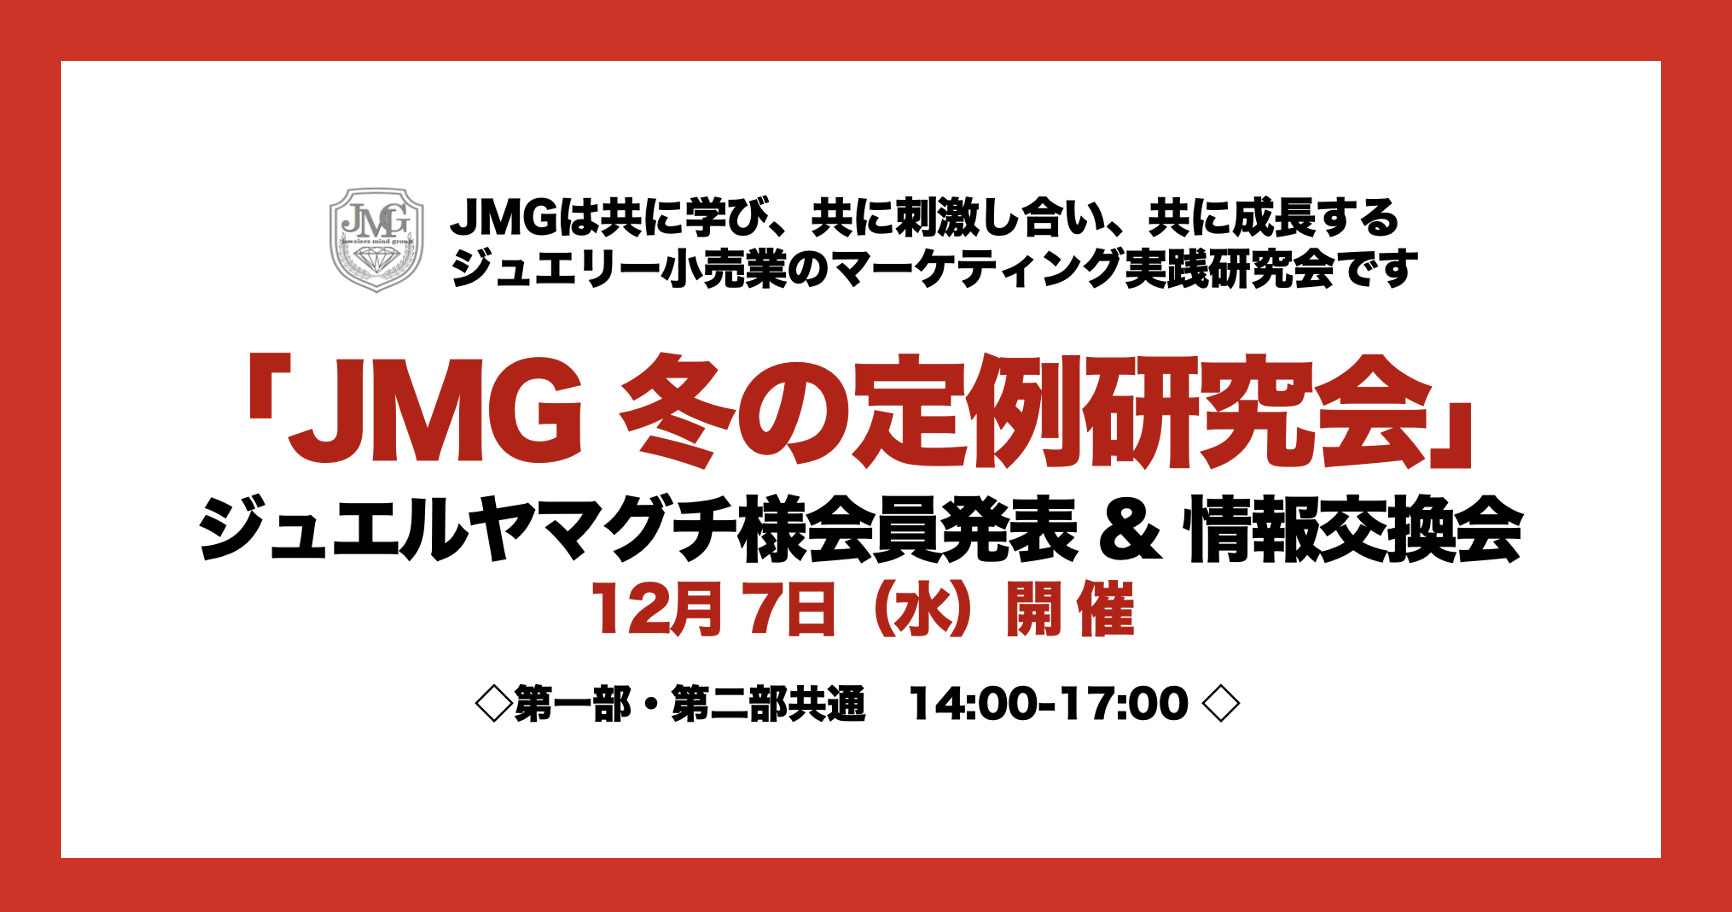 JMG定例研究会ジュエルヤマグチPR現代